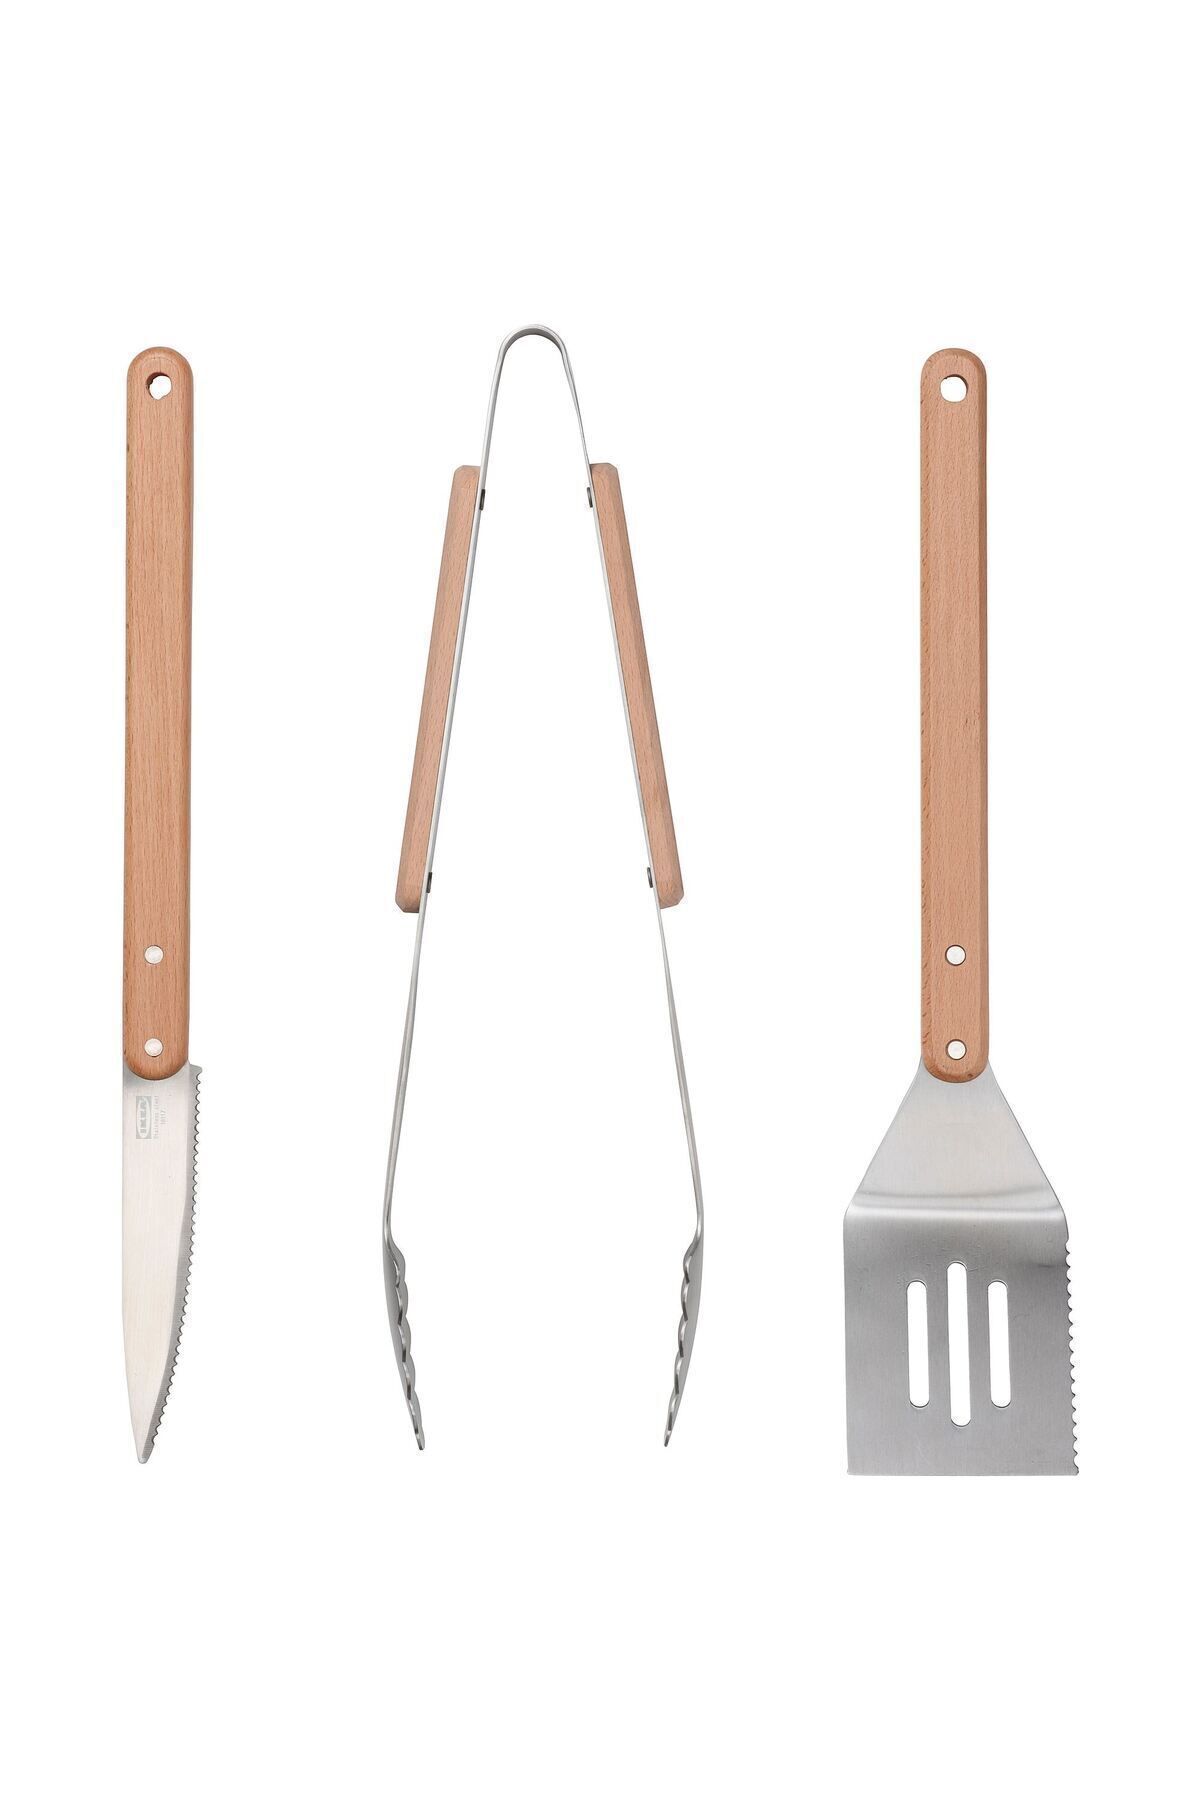 IKEA GRILLTIDER barbekü gereçleri seti, maşa, spatula ve barbekü bıçağı, 3 parça